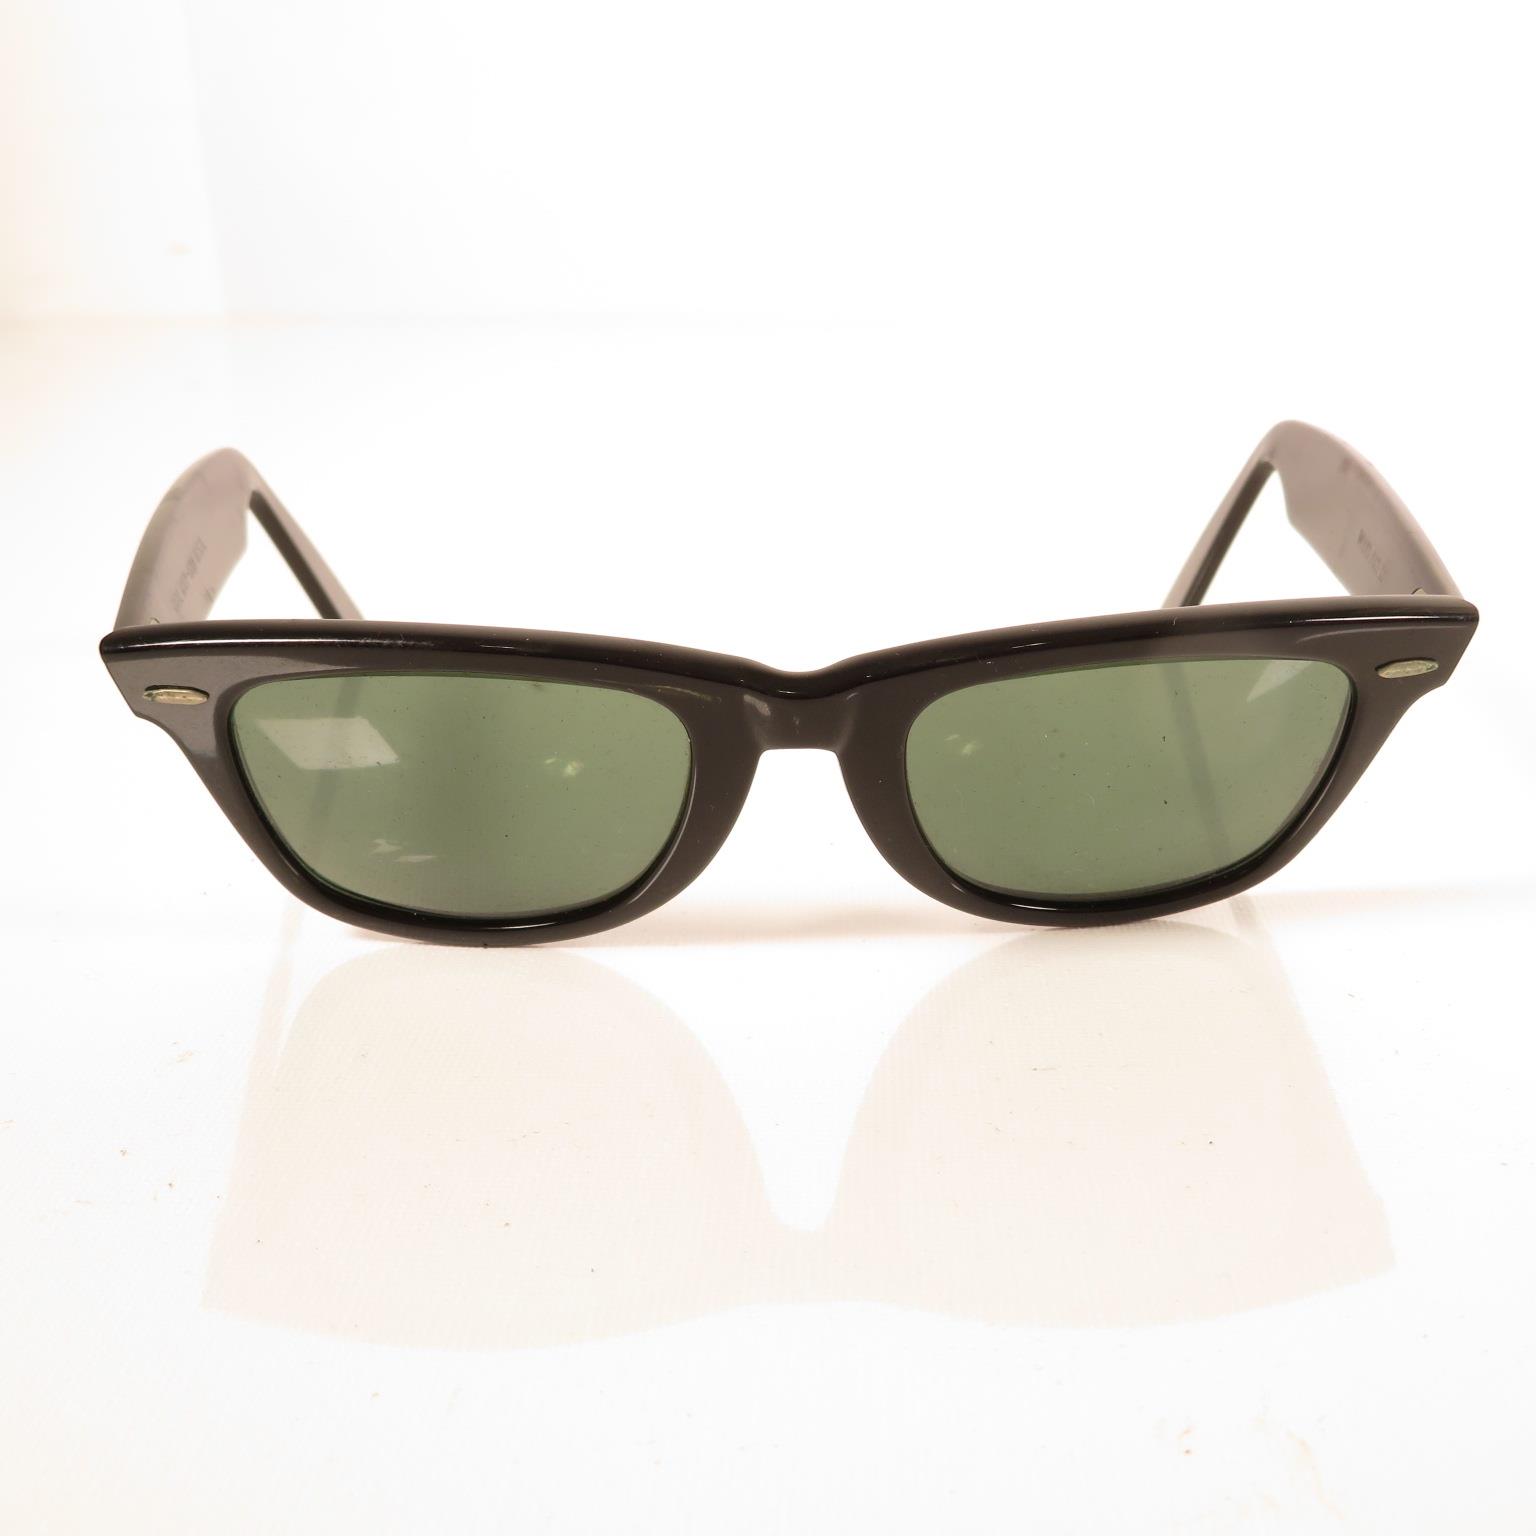 5x sets Ray Ban sunglasses - - Image 3 of 24